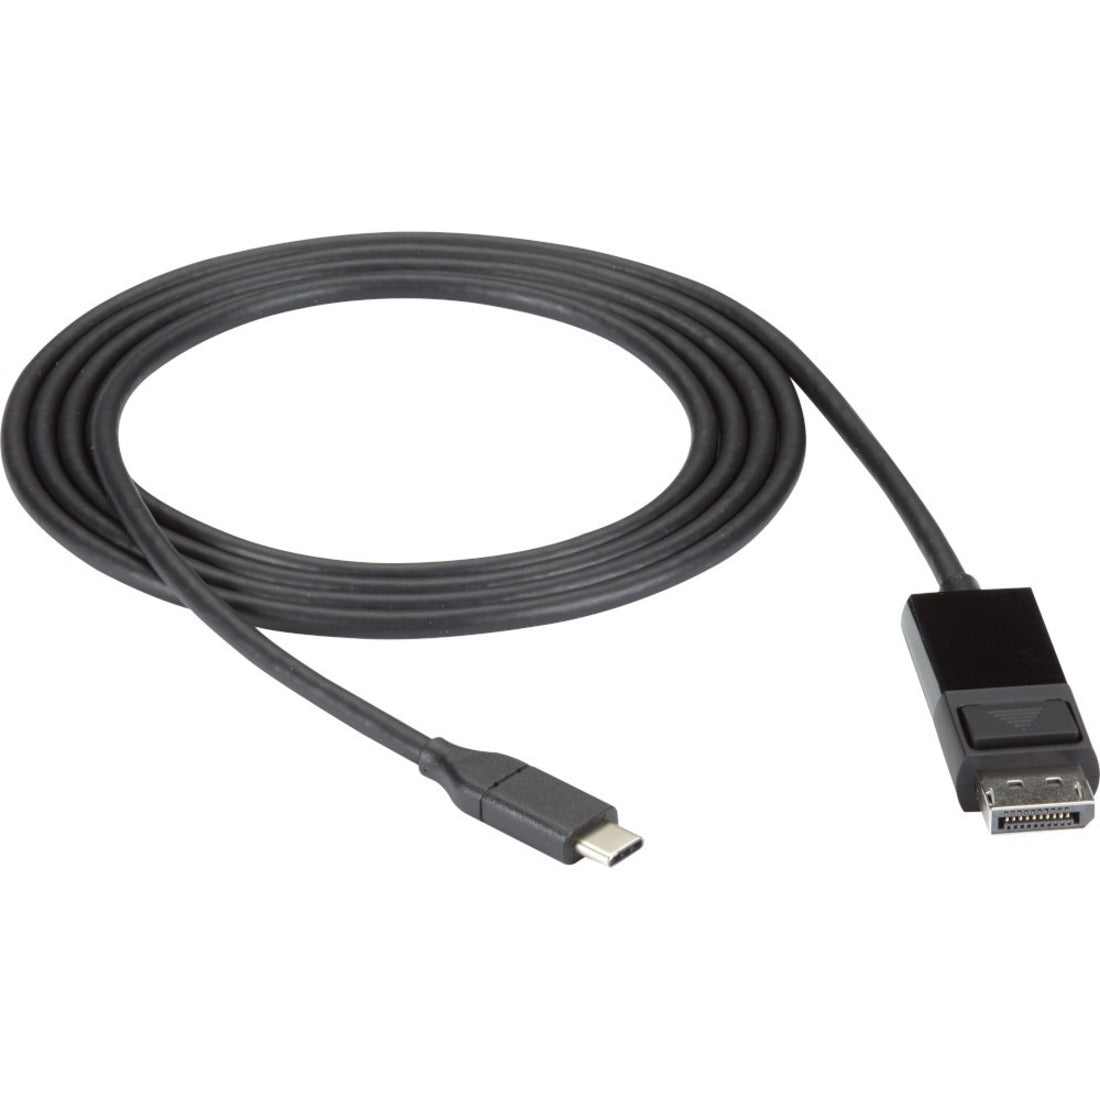 Black Box VA-USBC31-DP12-006 USB-C Adapter Cable - USB-C to DisplayPort Adapter, 4K60, HDR Support